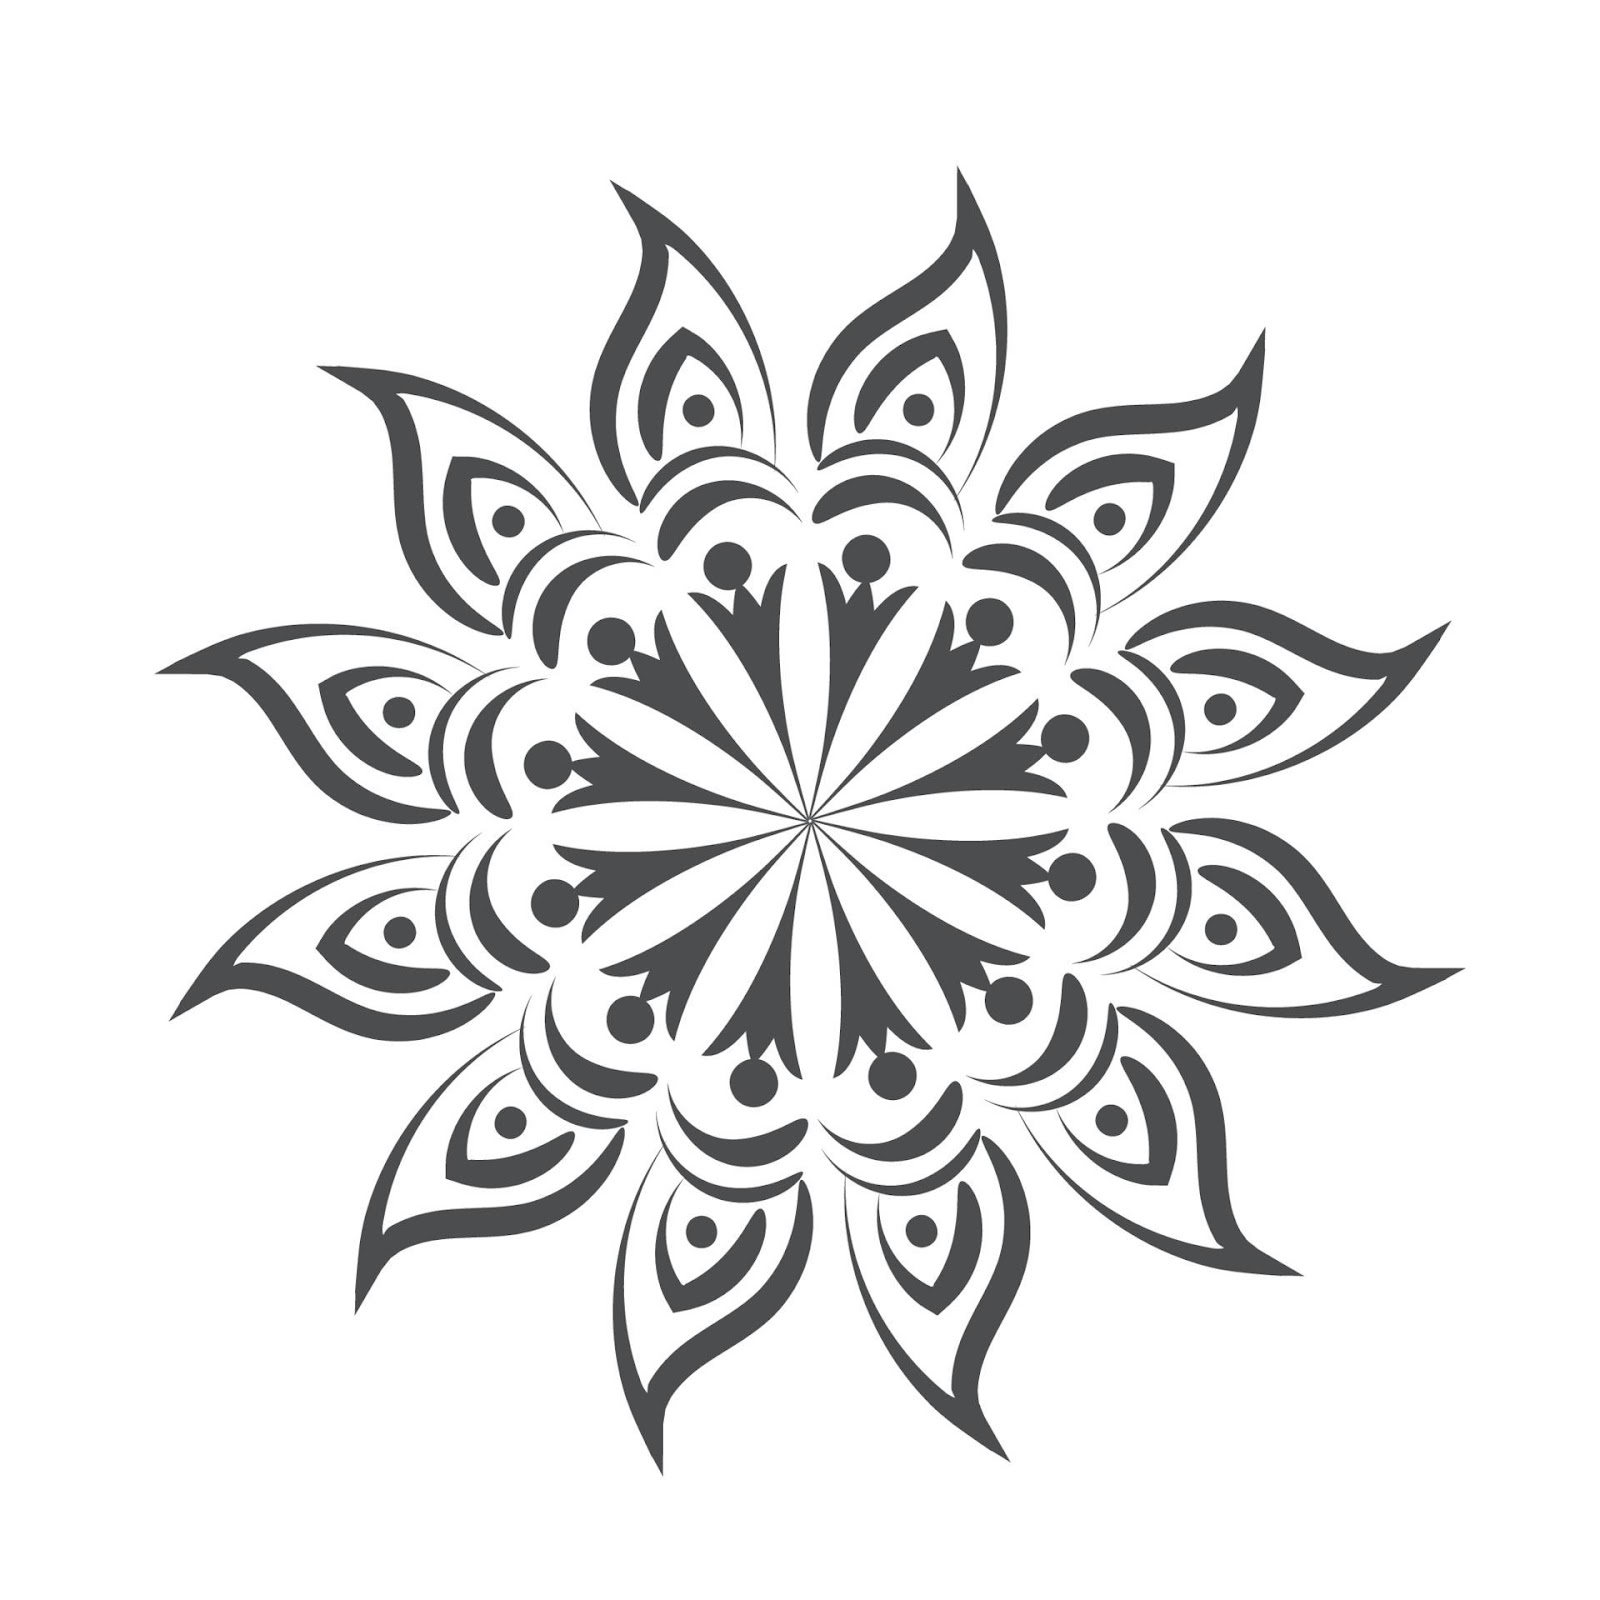 Mandala Art design